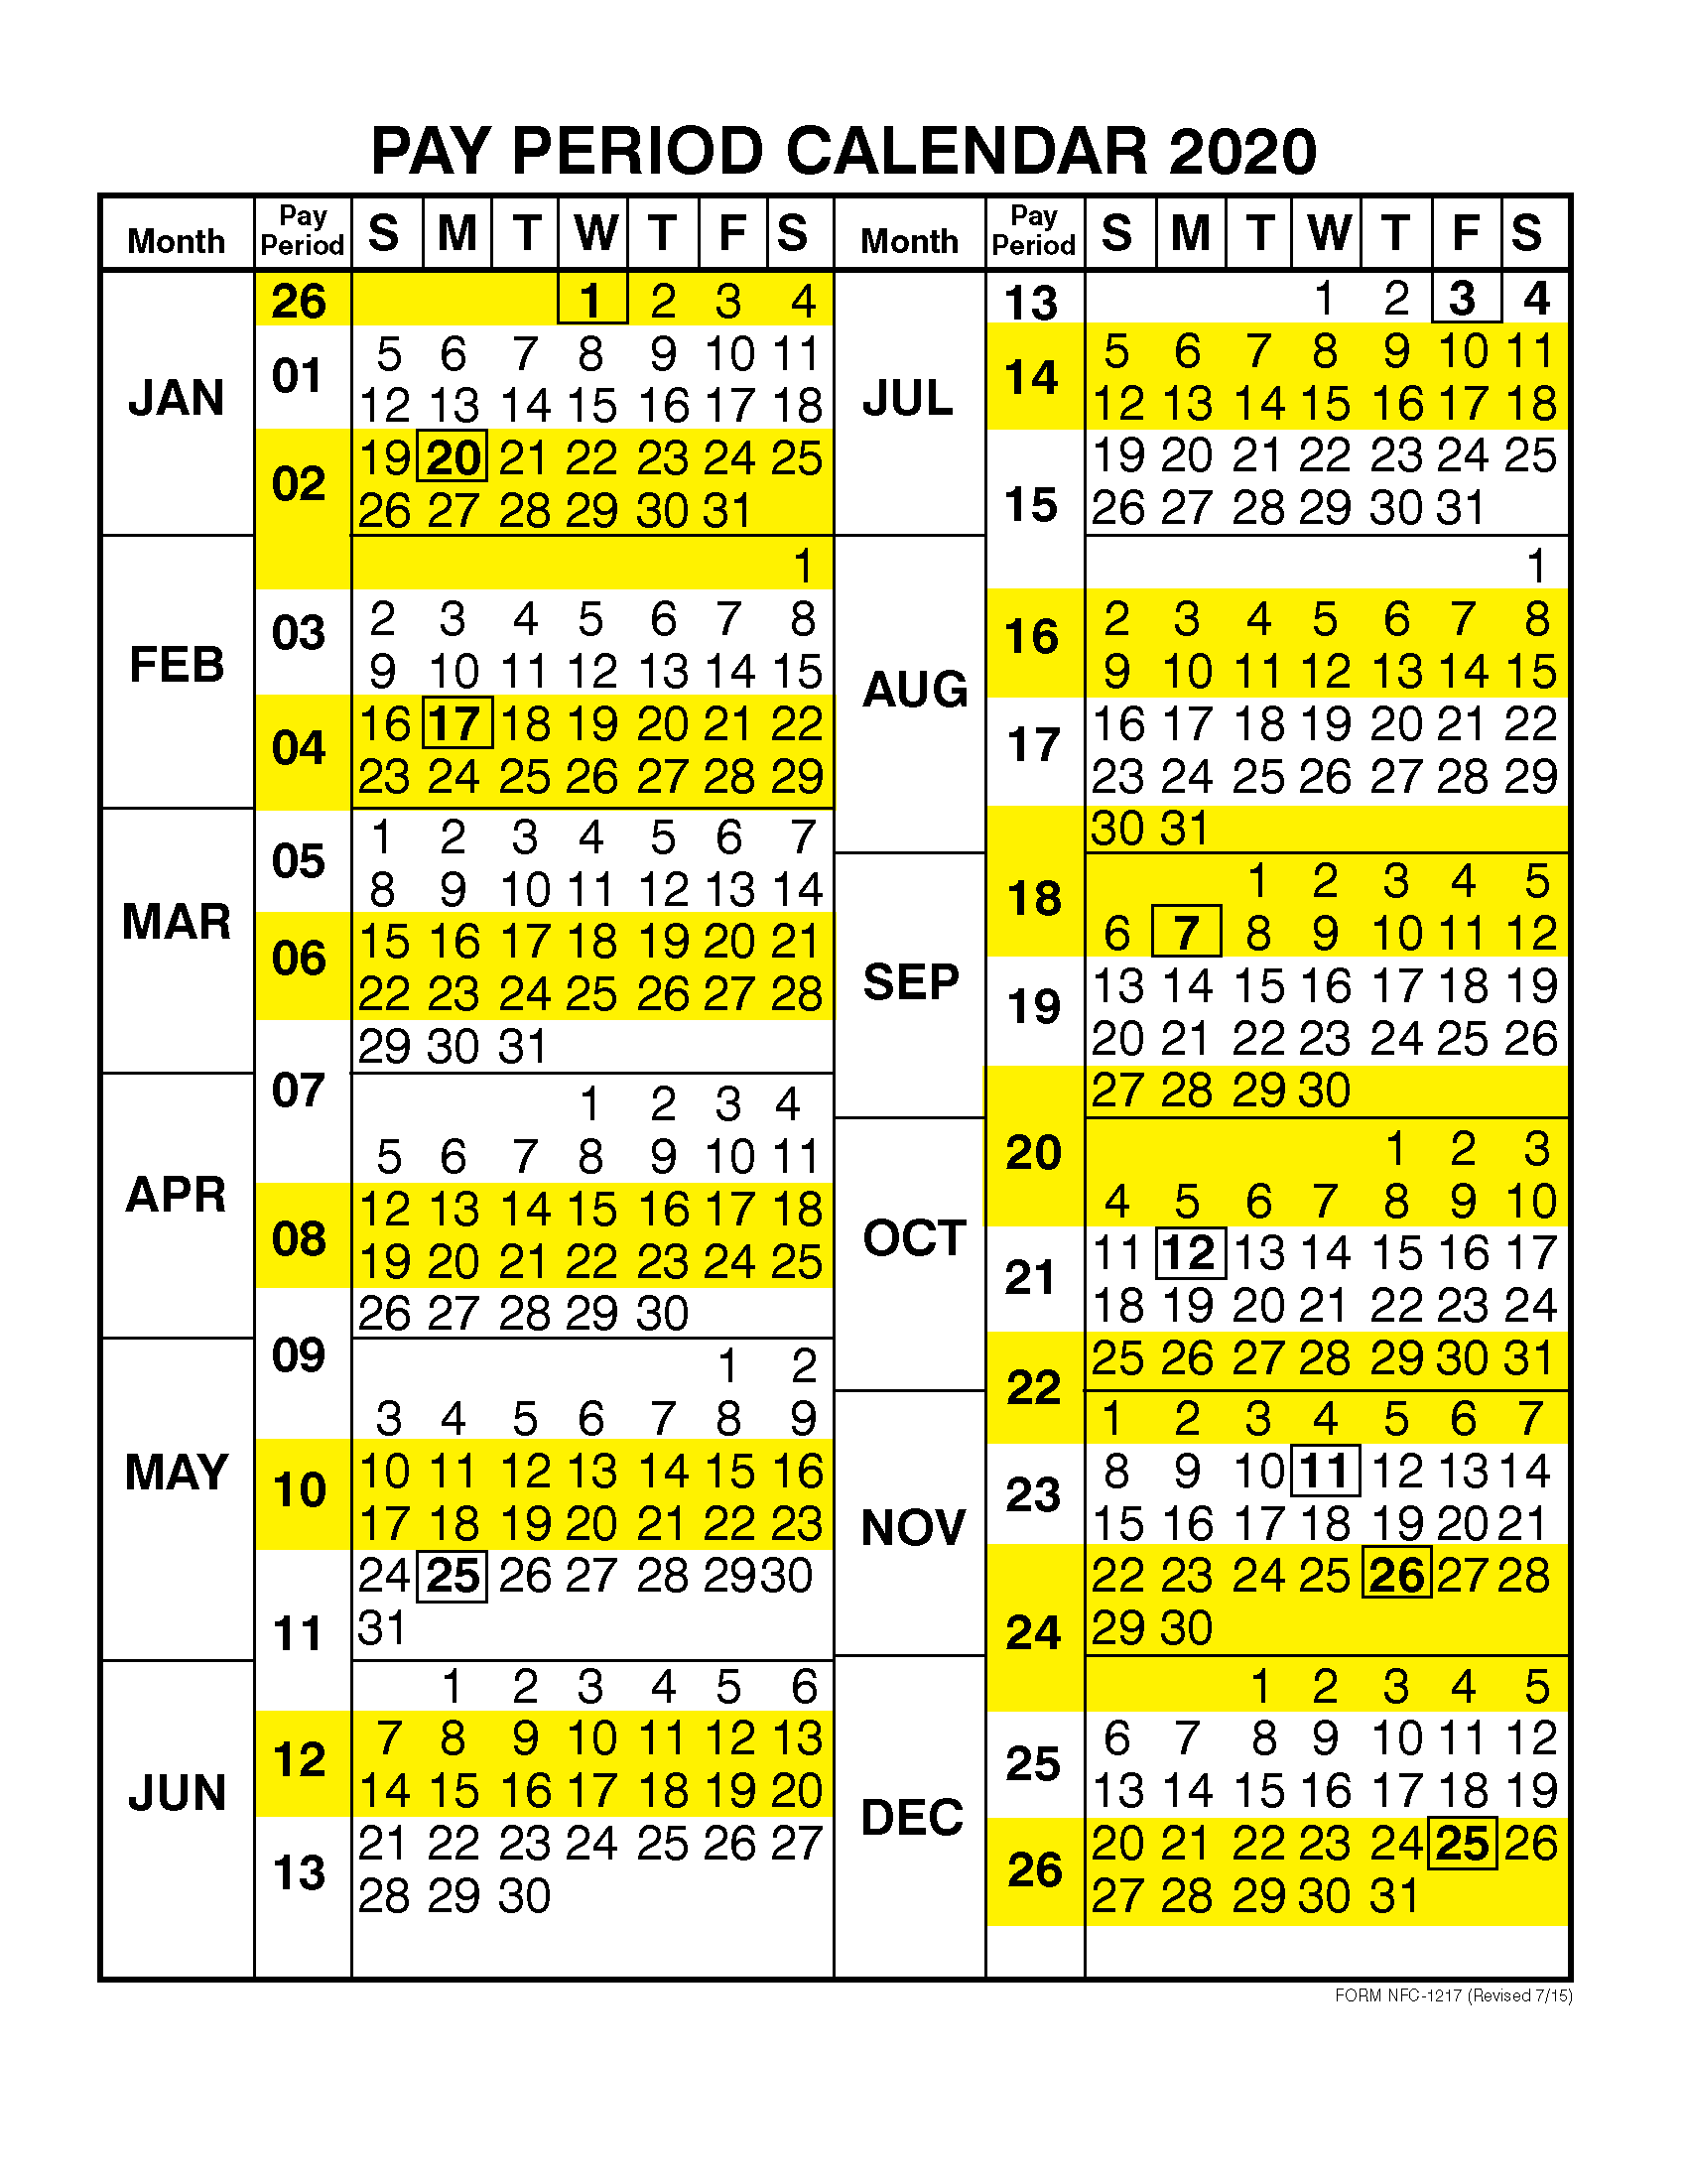 tsa pay period calendar 2021 Pay Period Calendar 2020 By Calendar Year Free Printable 2020 Monthly Calendar With Holidays tsa pay period calendar 2021